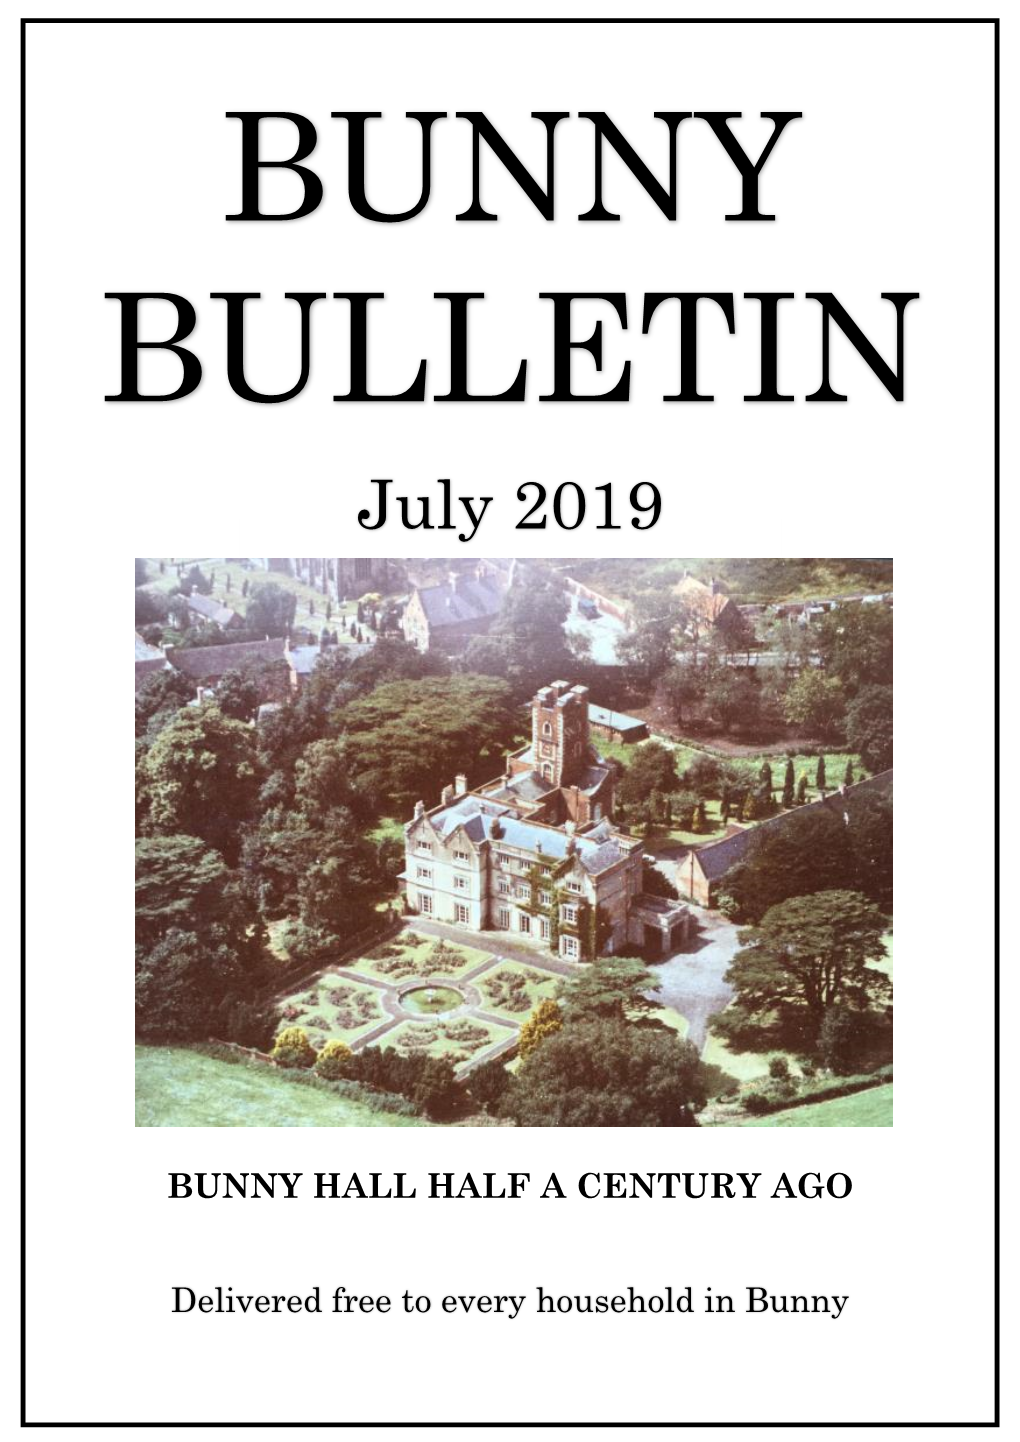 BUNNY BULLETIN July 2019